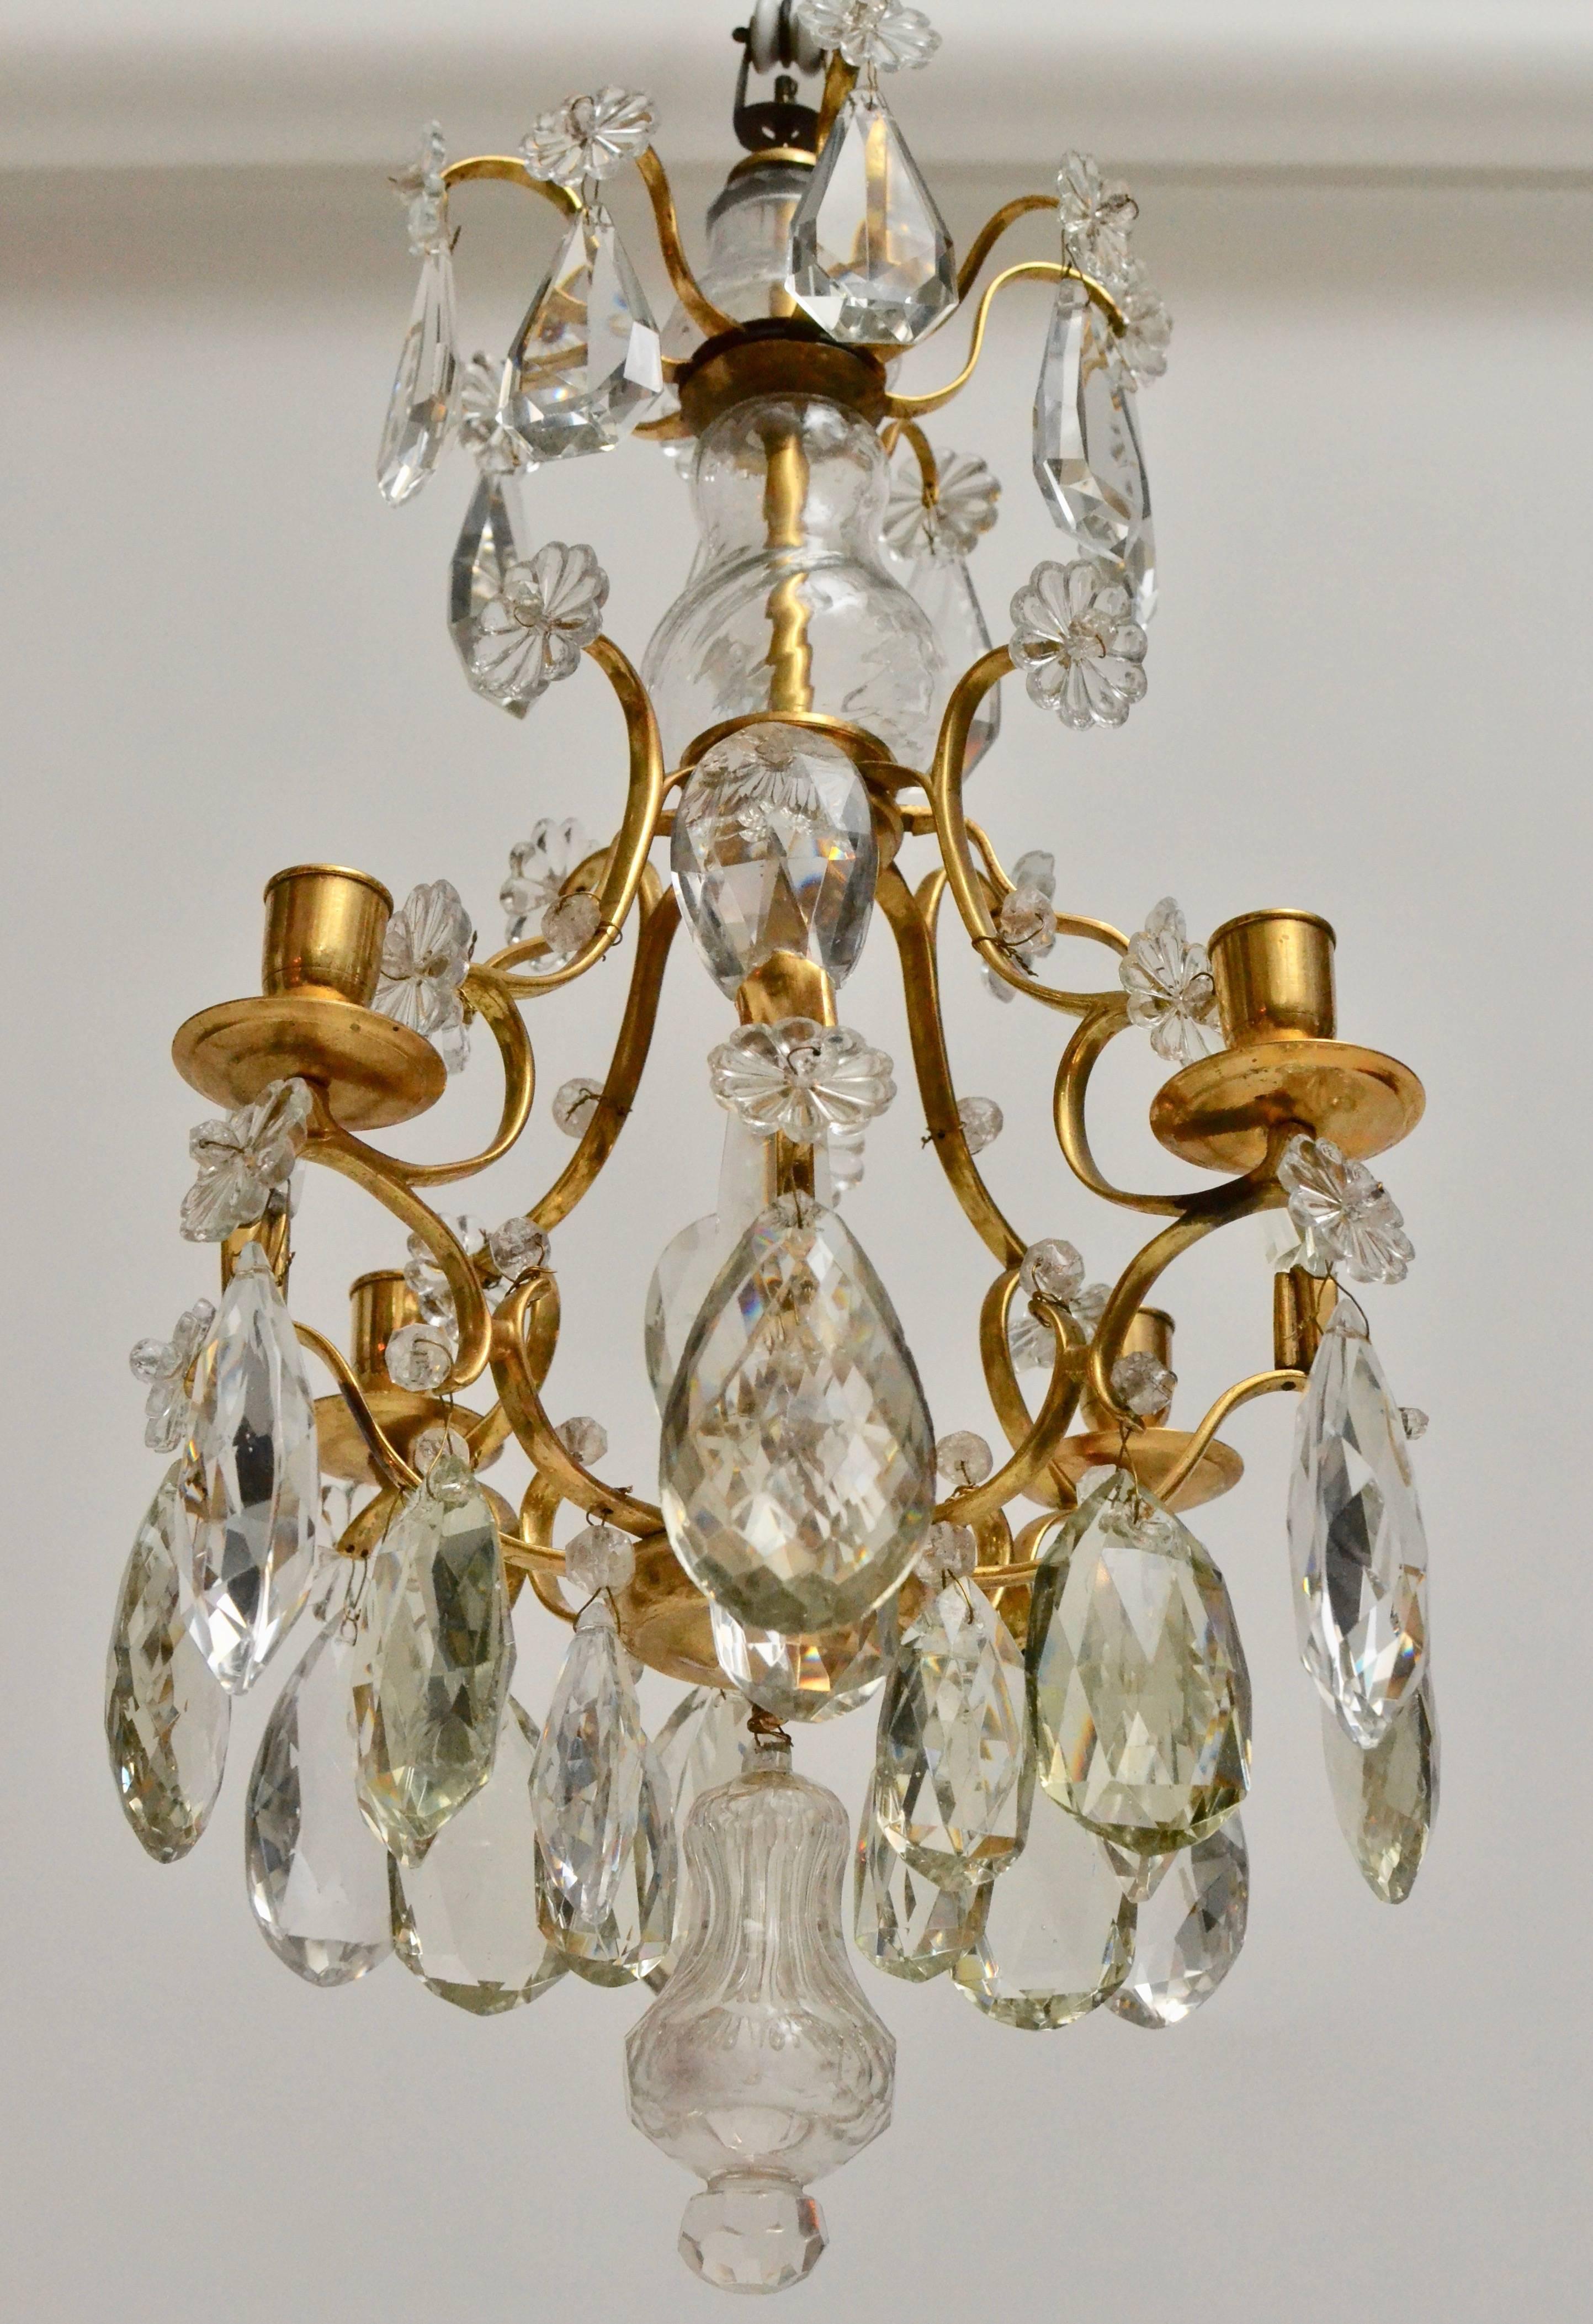 A small Swedish Rococo chandelier, 19th century.